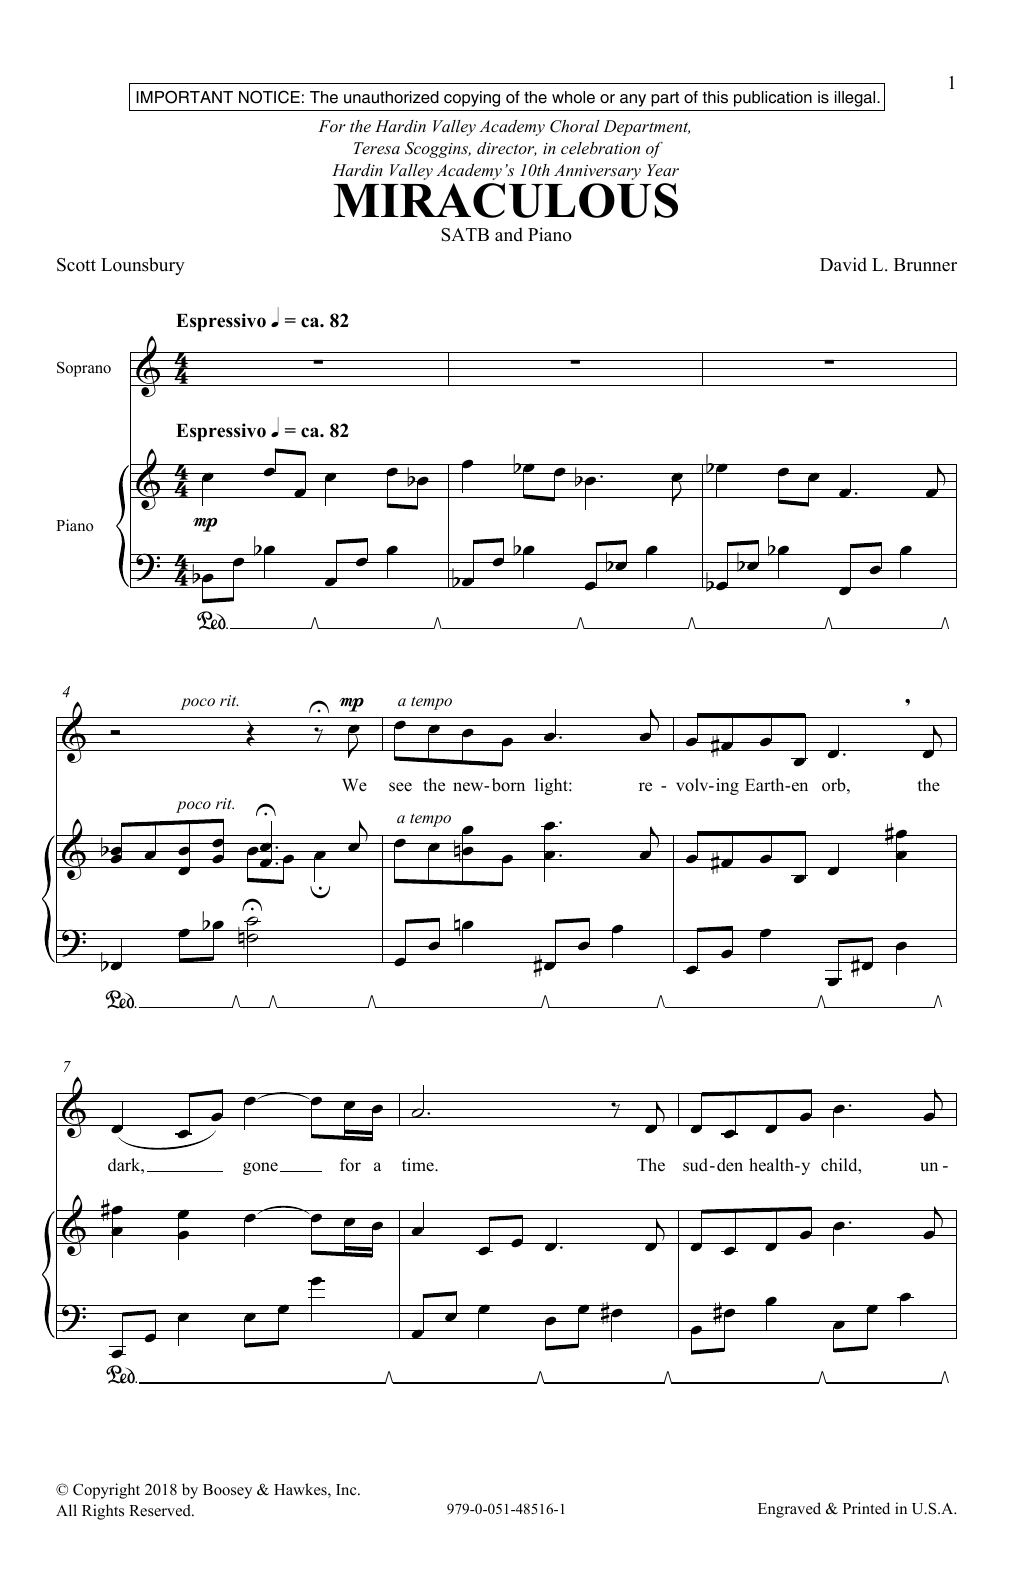 David Brunner & Scott Lounsbury Miraculous sheet music notes and chords arranged for SATB Choir